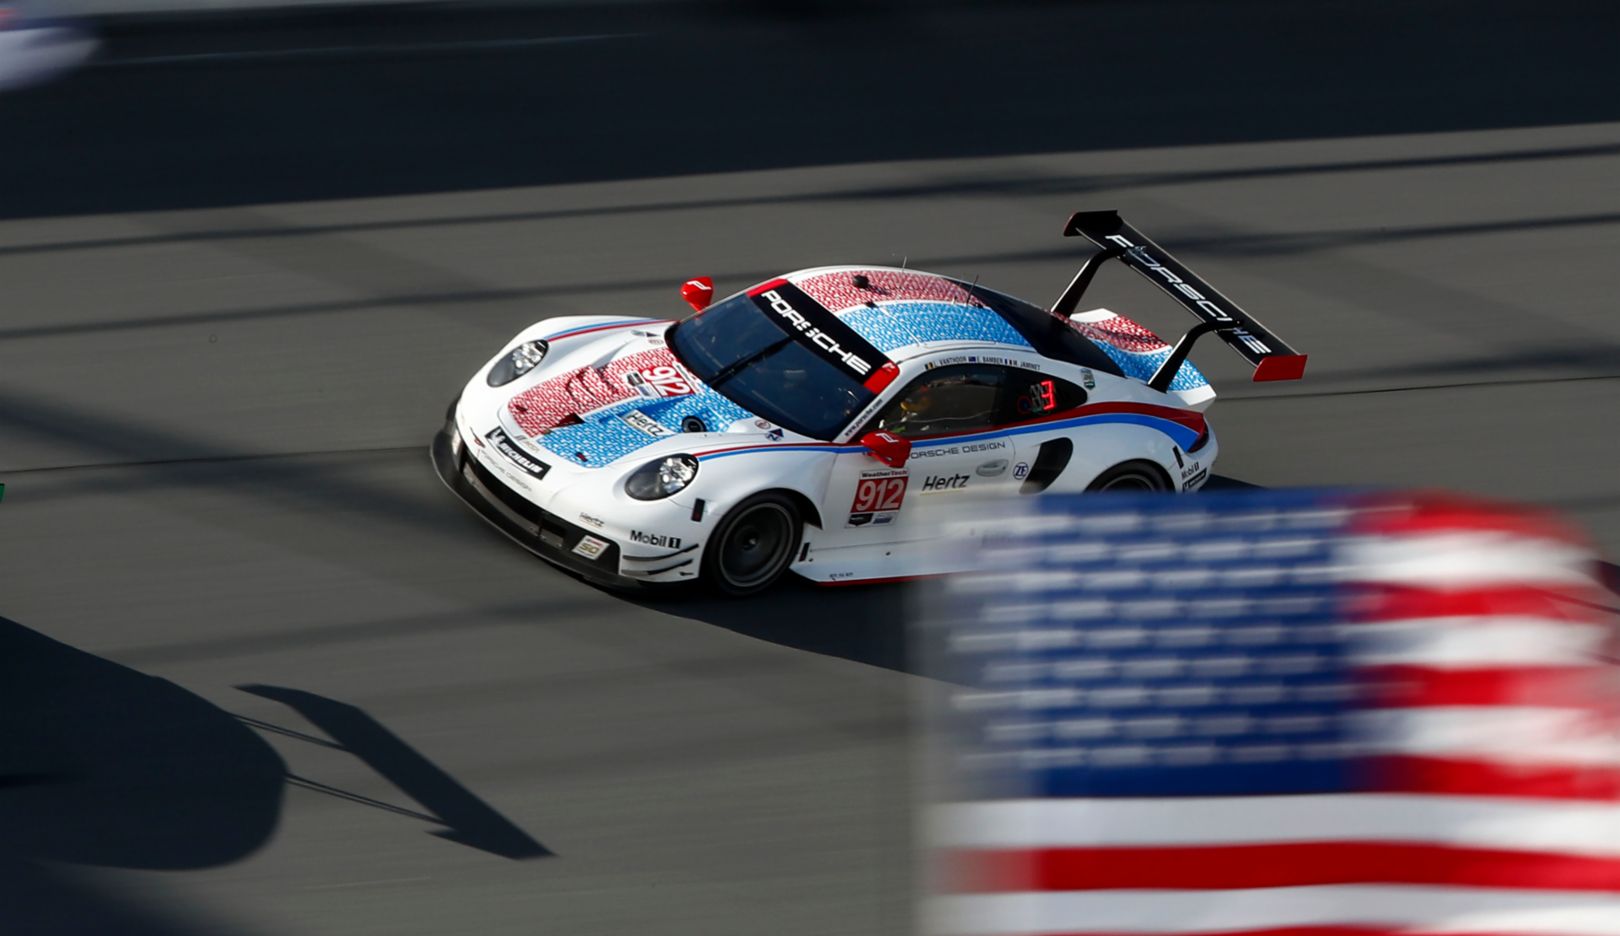 Daytona 2019: The Porsche 911 RSR in iconic Brumos livery